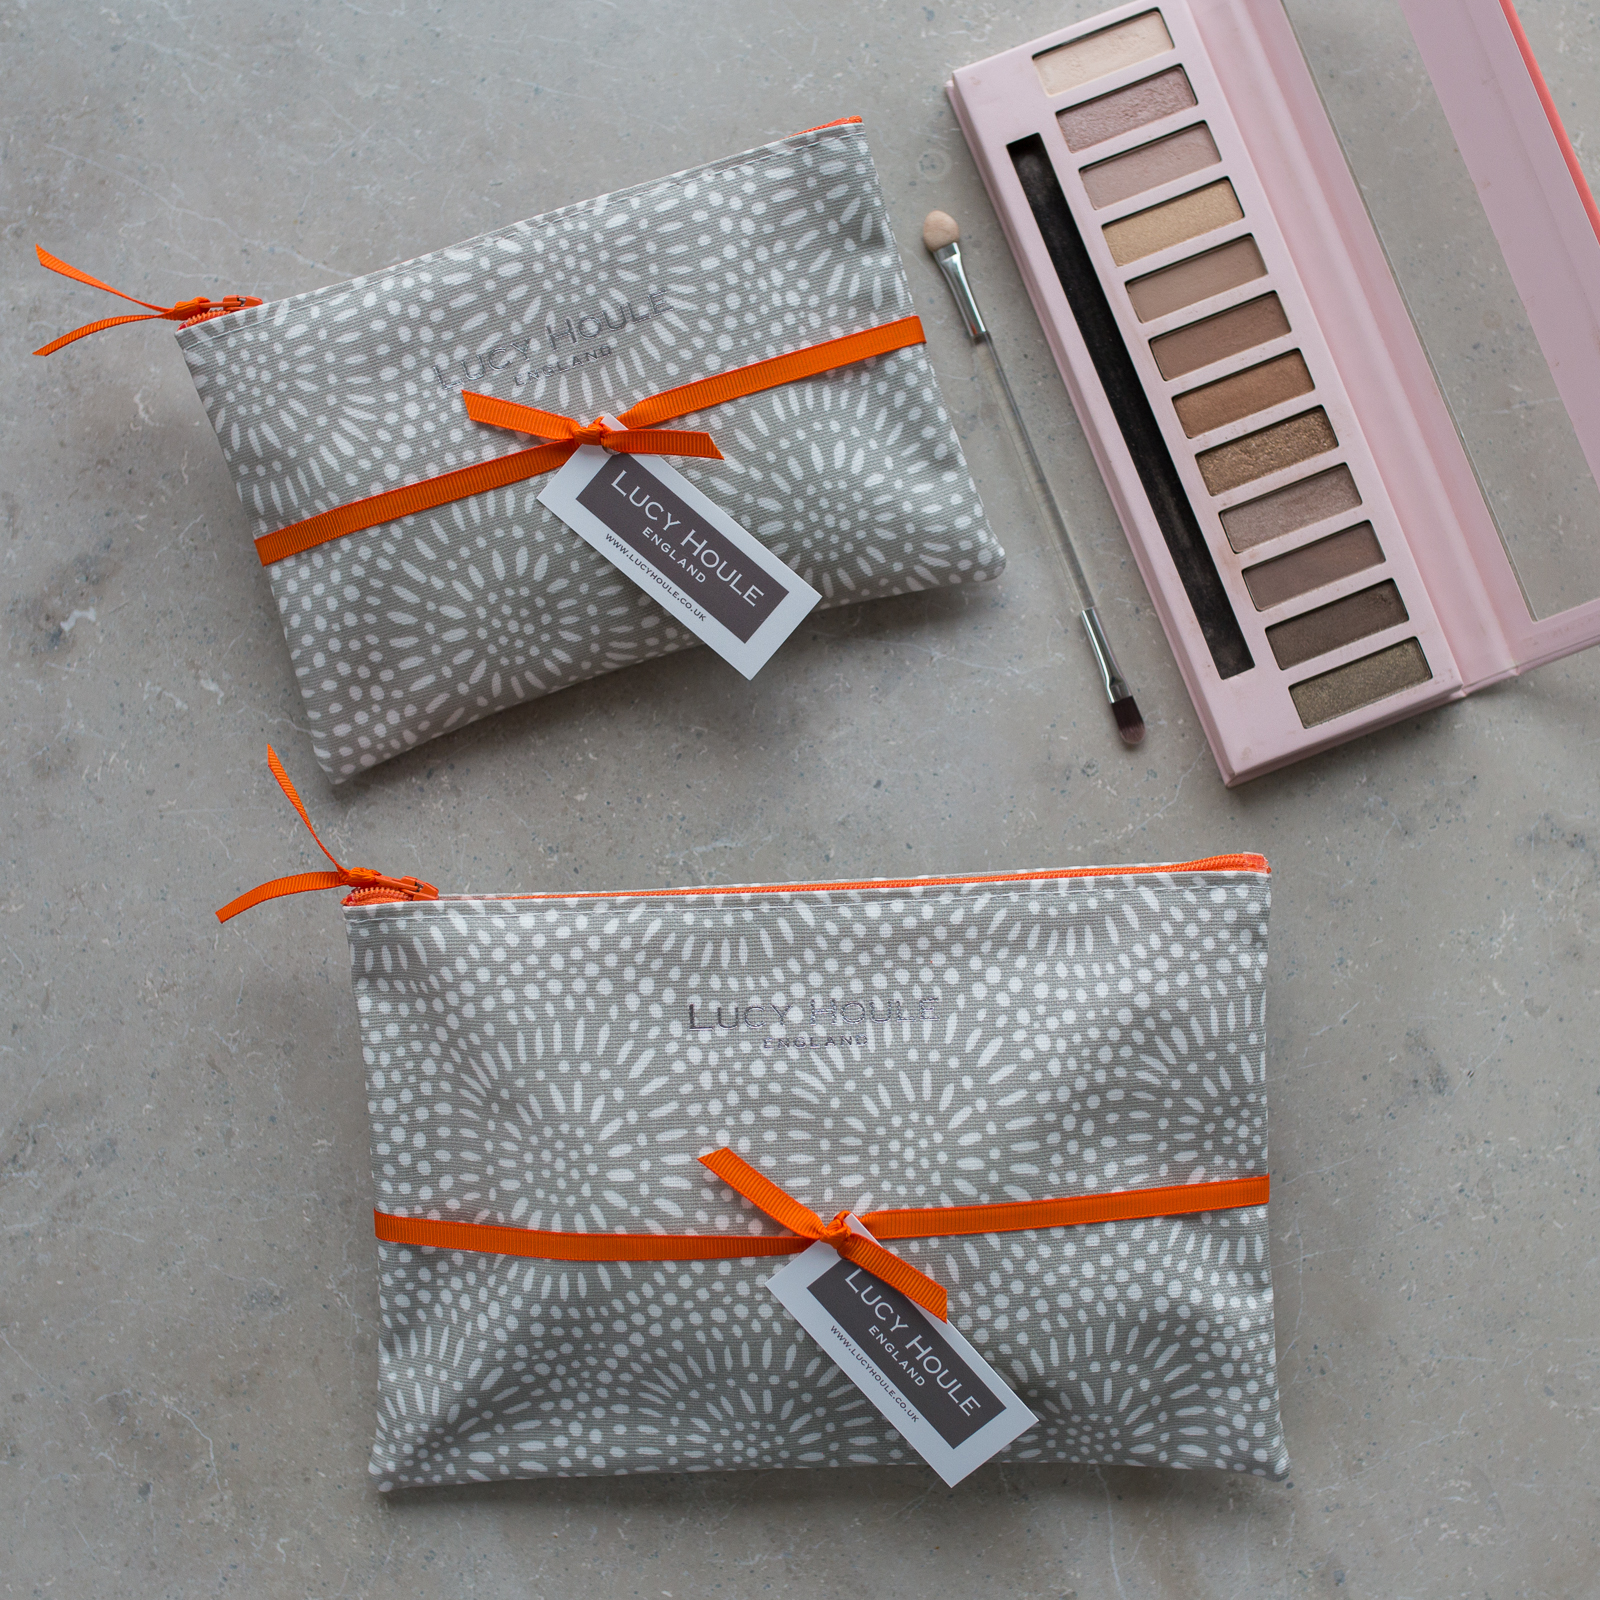 Stone Sunburst  Make-Up Bag with Orange Zip